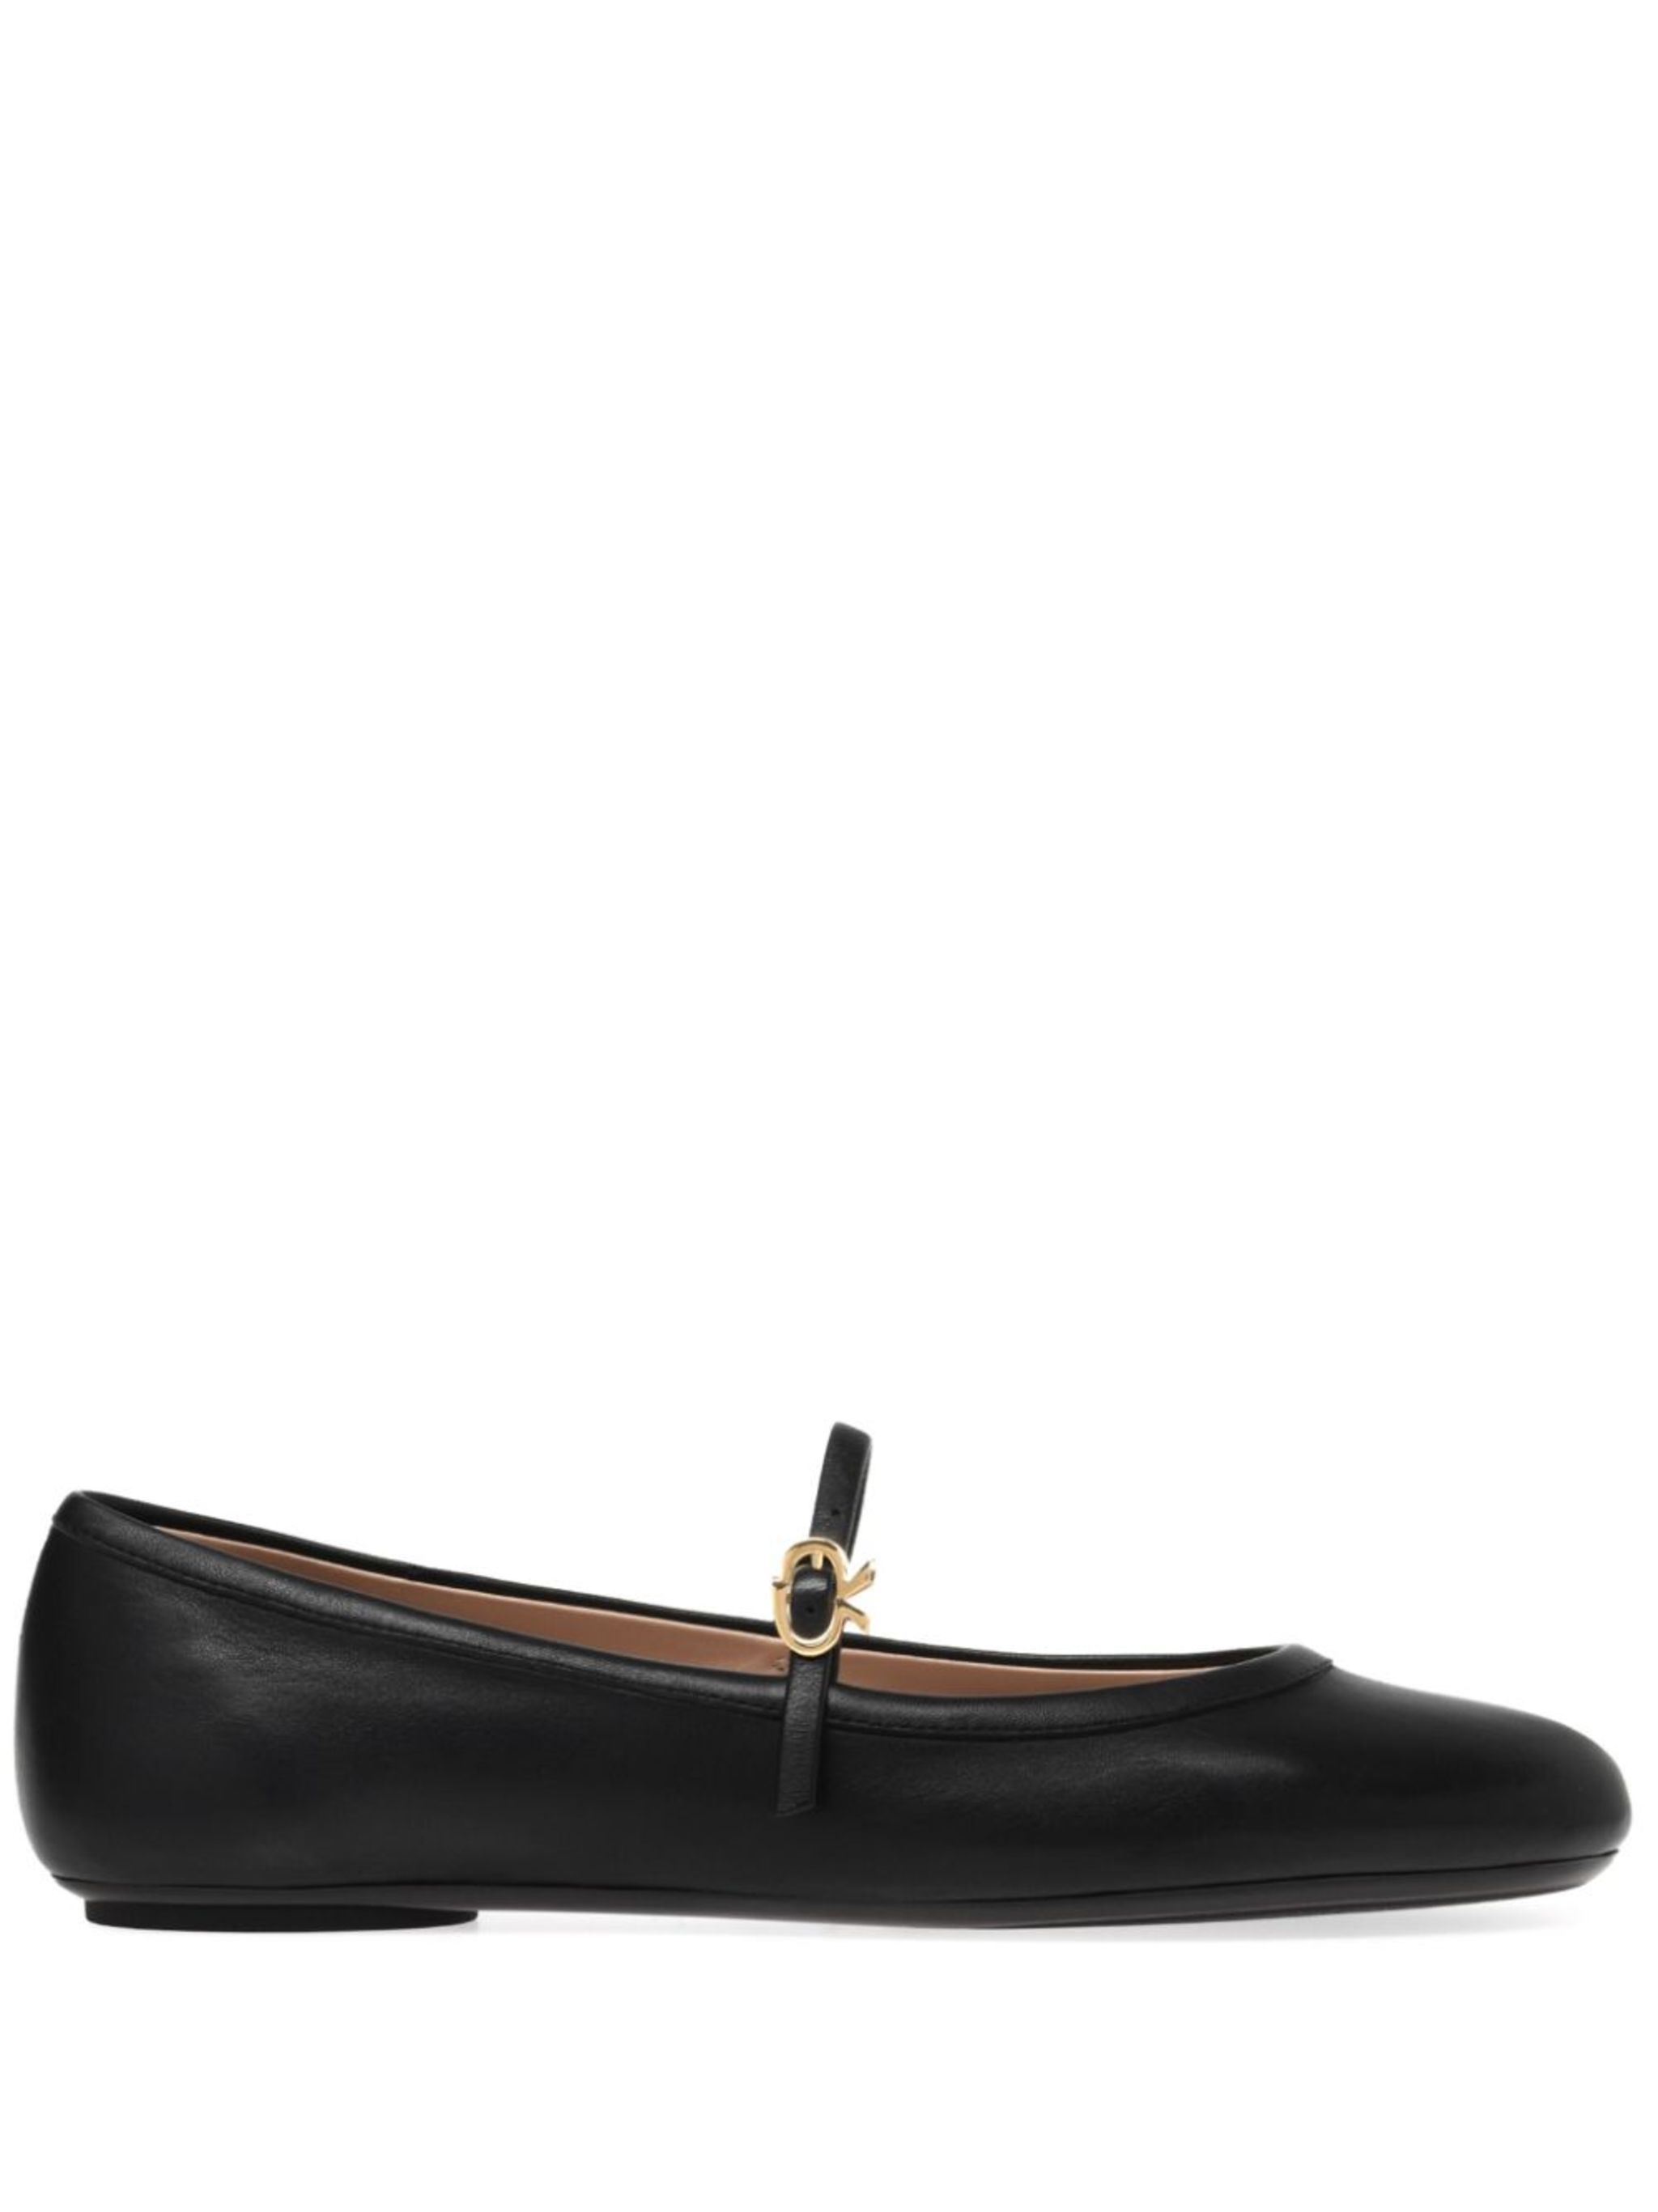 Carla leather ballerina shoes - 1